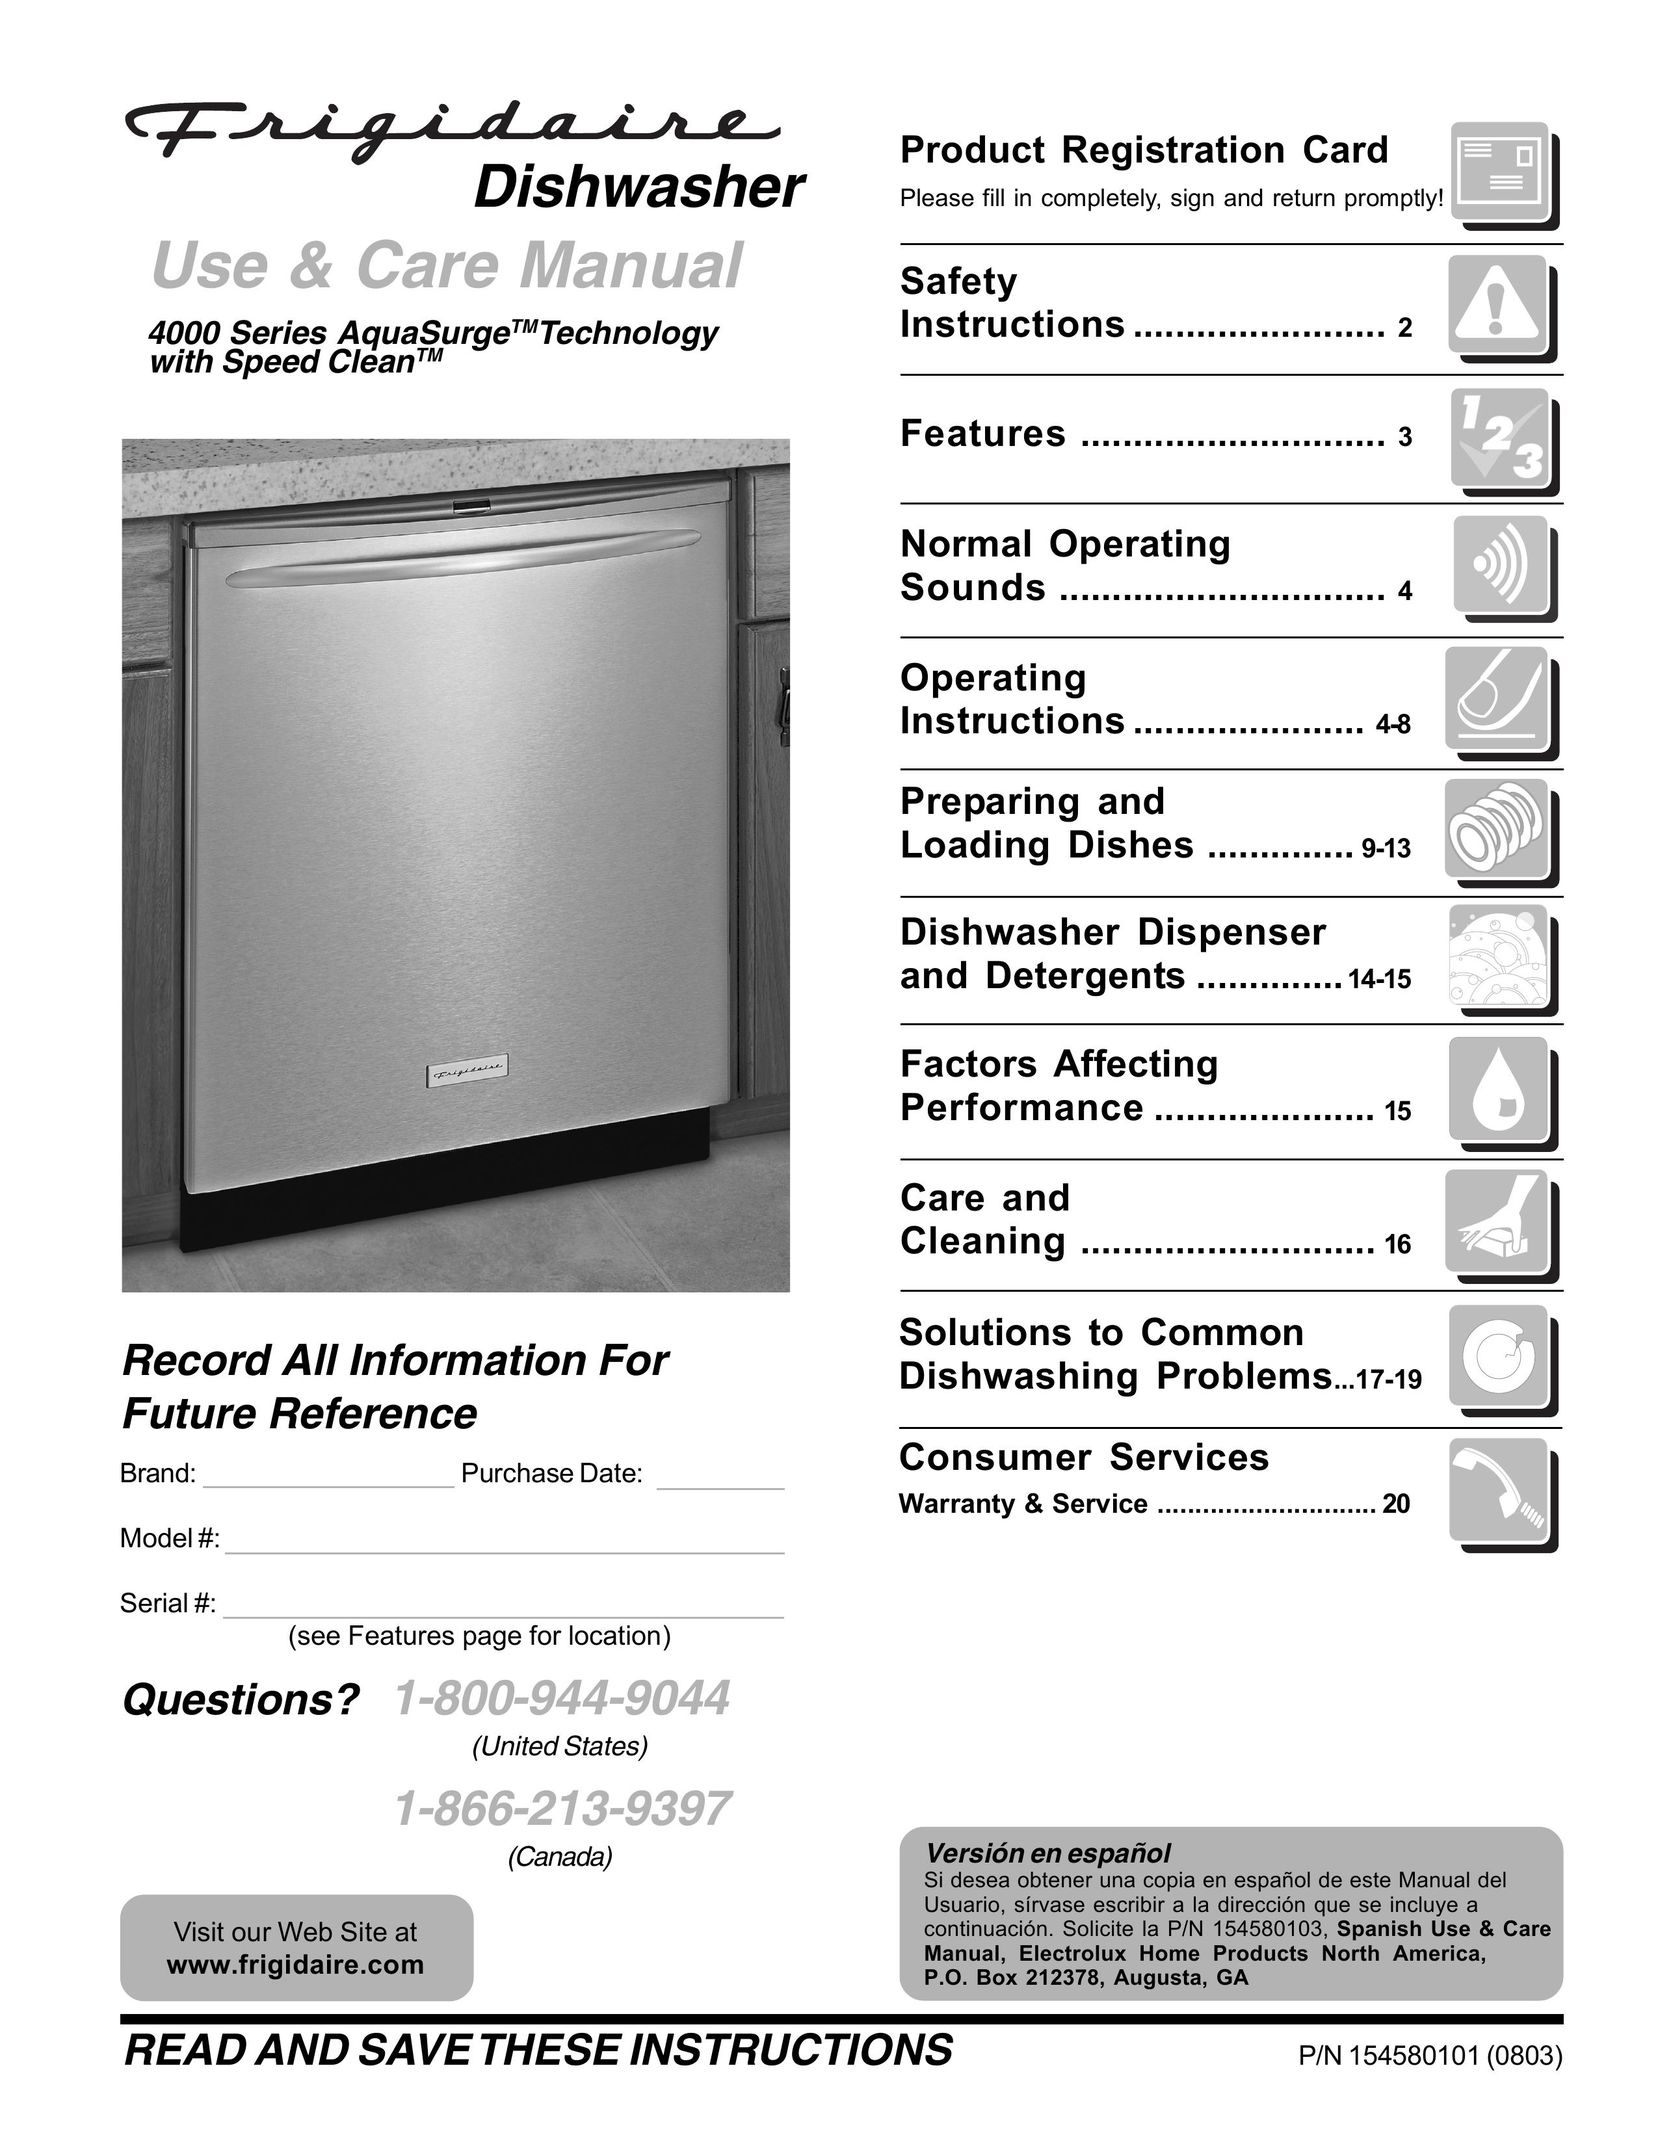 Frigidaire 4000 Series AquaSurgeTM Technology Dishwasher User Manual